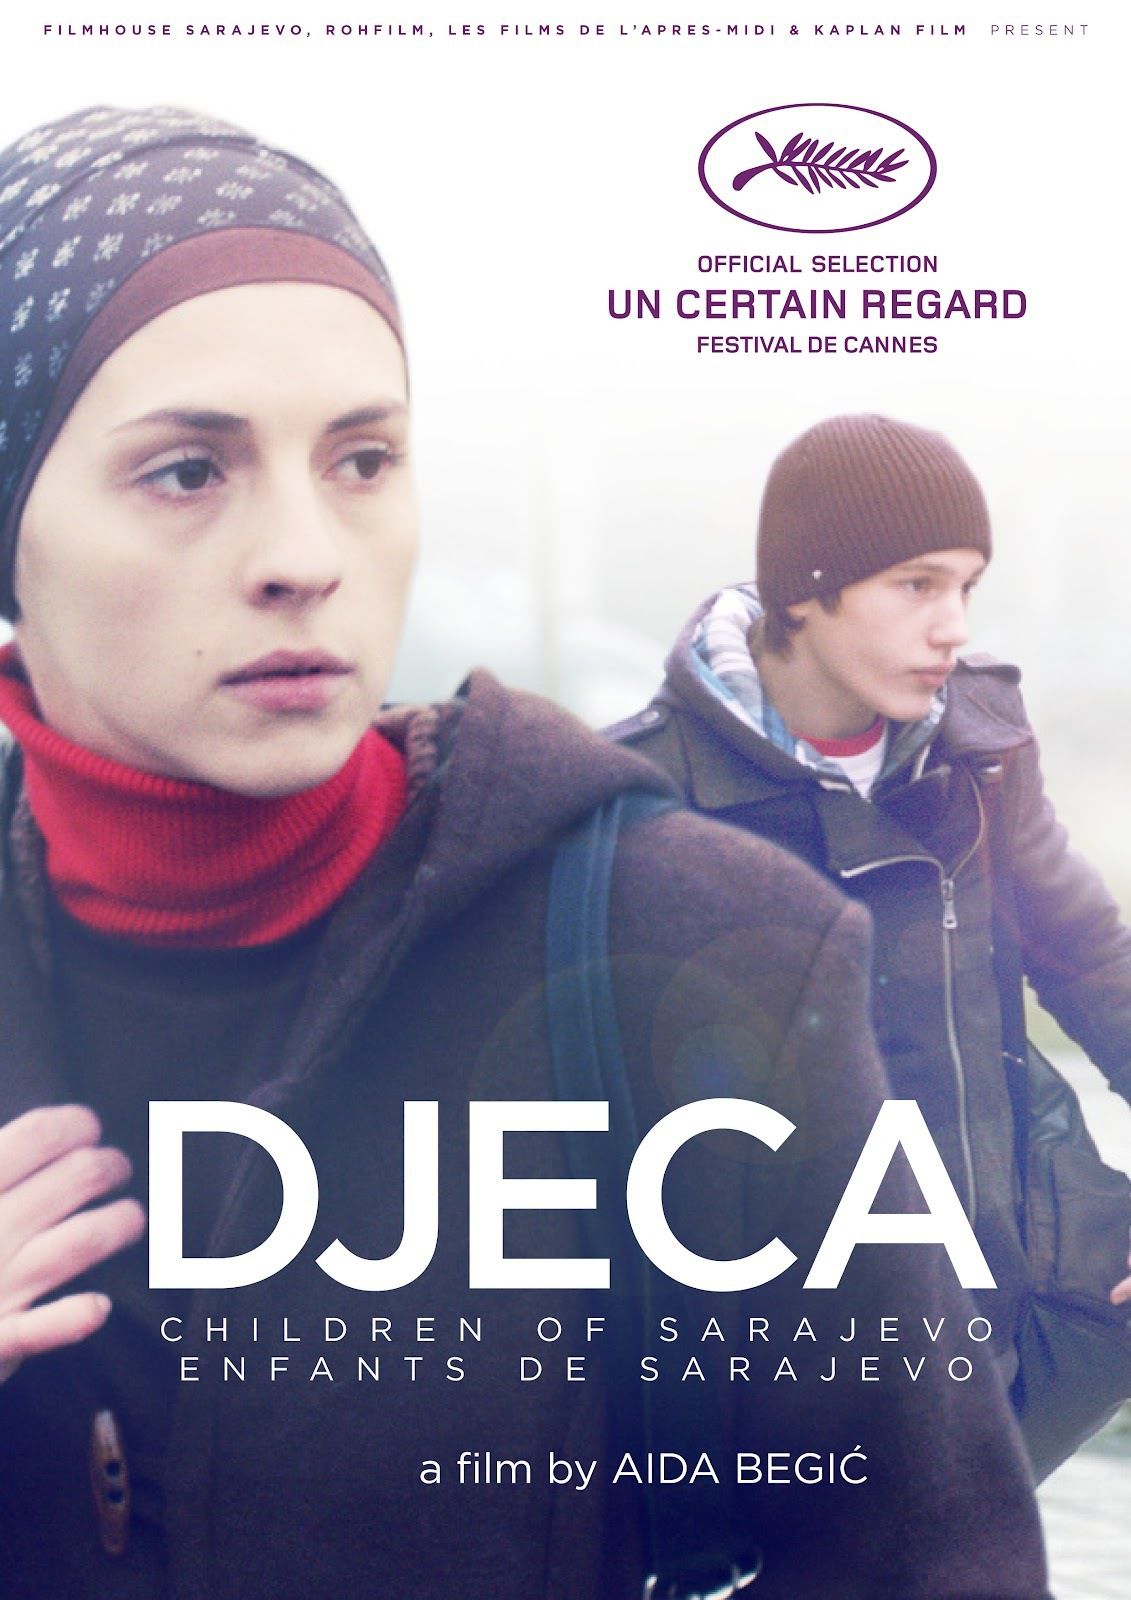 Djeca : Enfants de Sarajevo - Film (2012) streaming VF gratuit complet